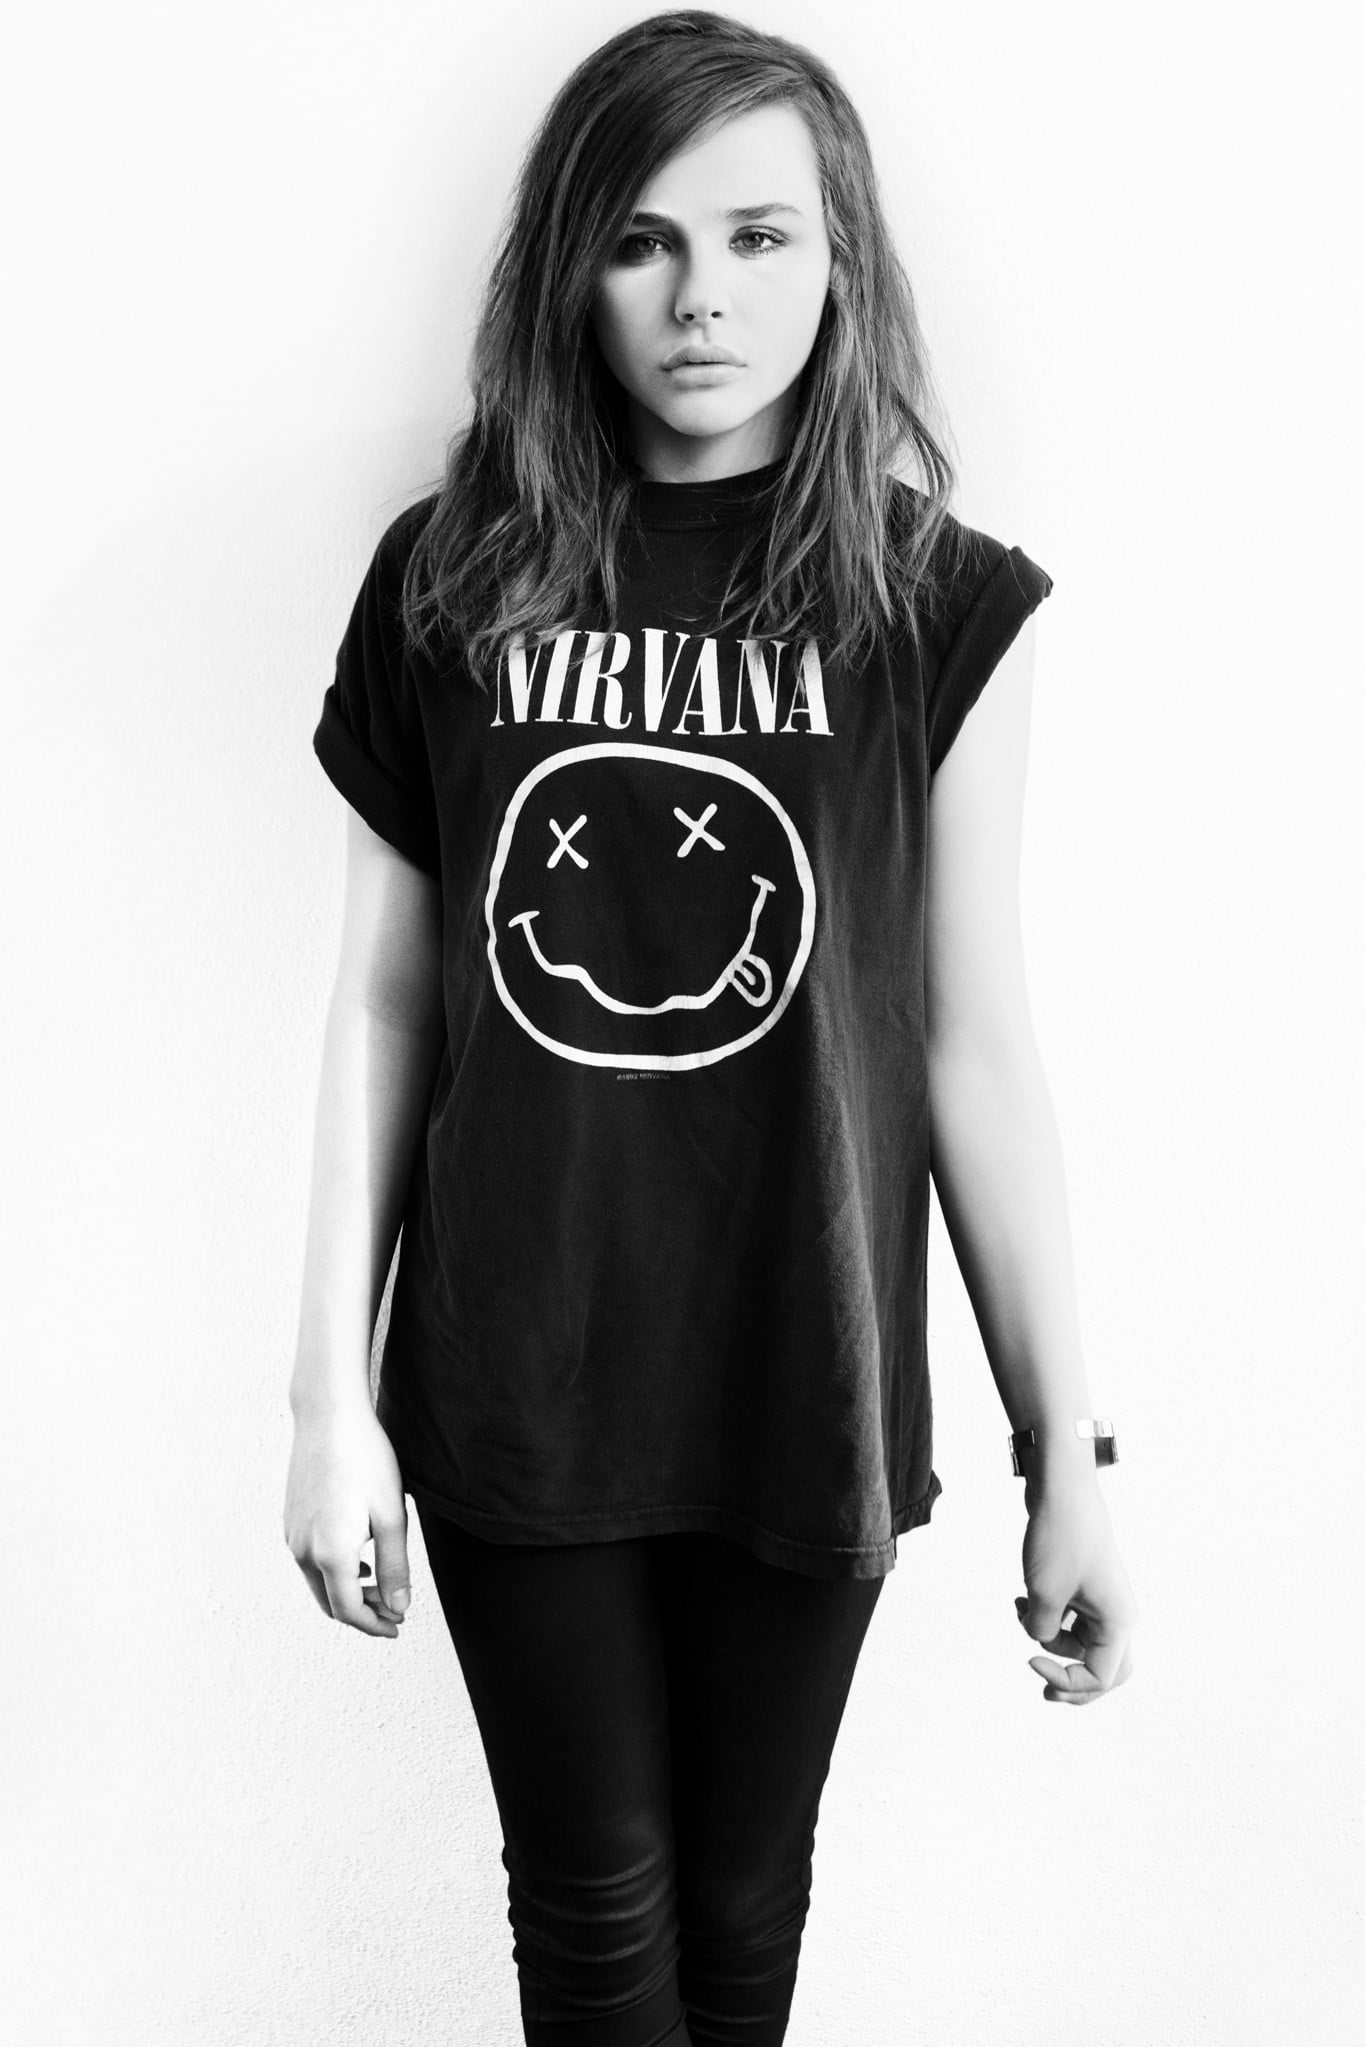 woman in black shirt, Chloë Grace Moretz, Nirvana, portrait